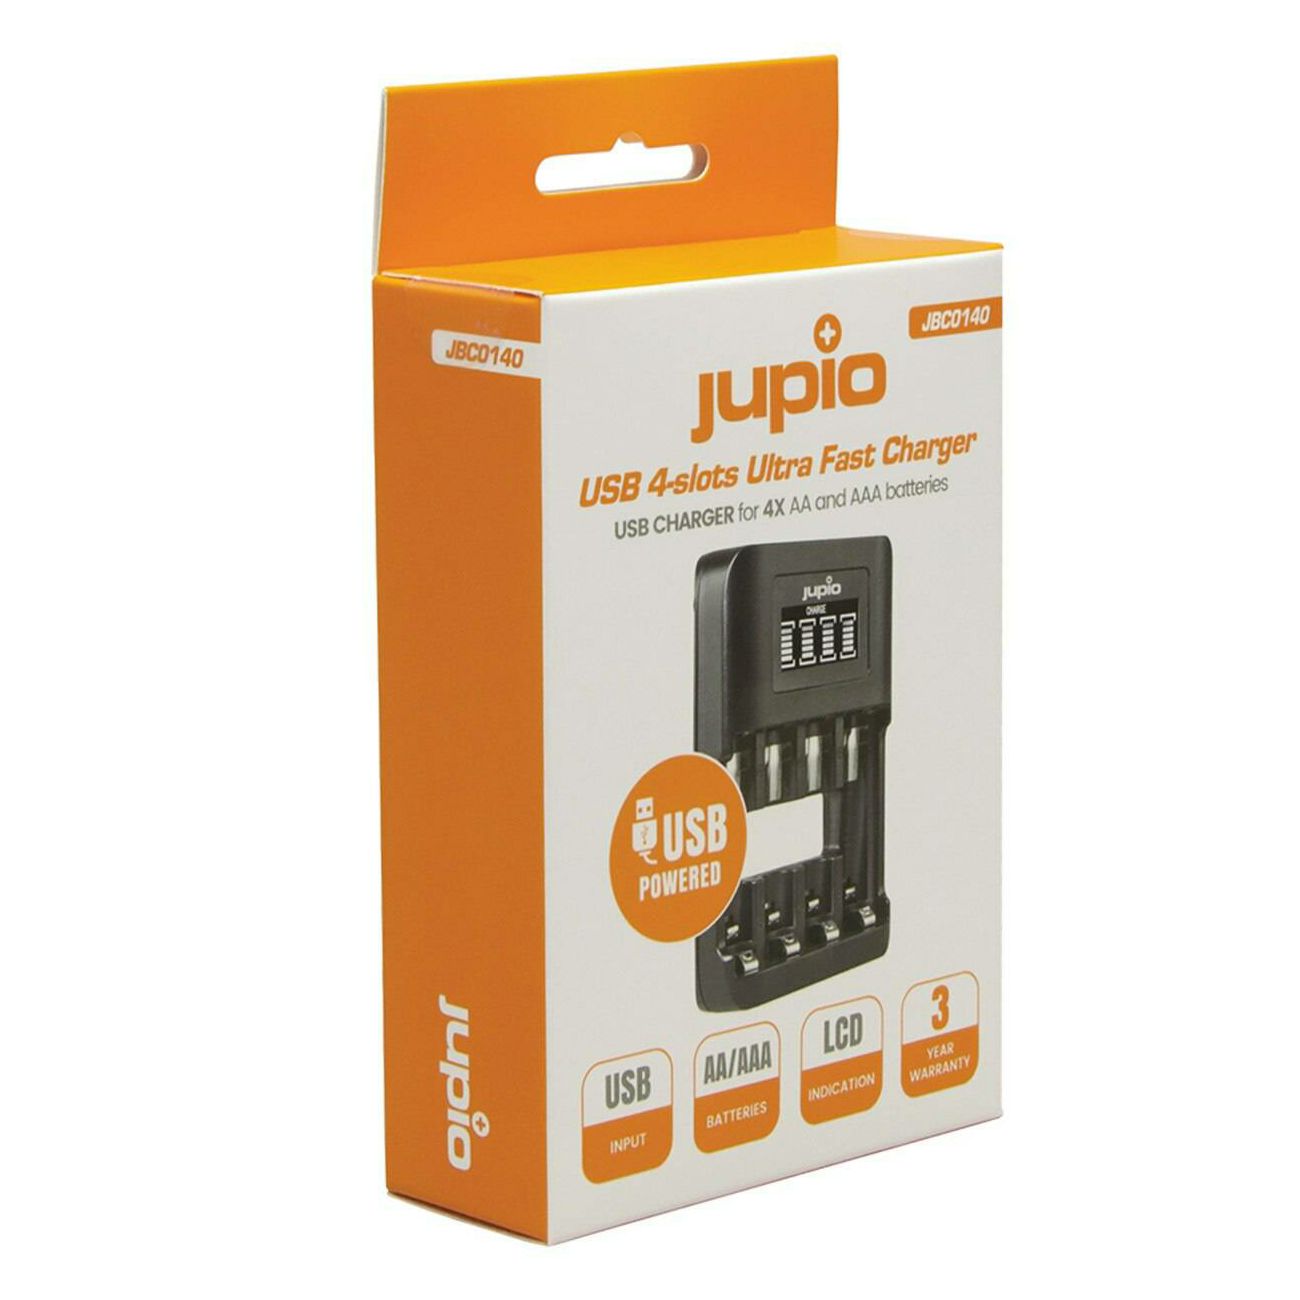 Jupio USB 4-slots Ultra Fast Battery Charger LCD punjač za 4xAA 4xAAA baterije Lithium-Ion Battery Pack (JBC0140)